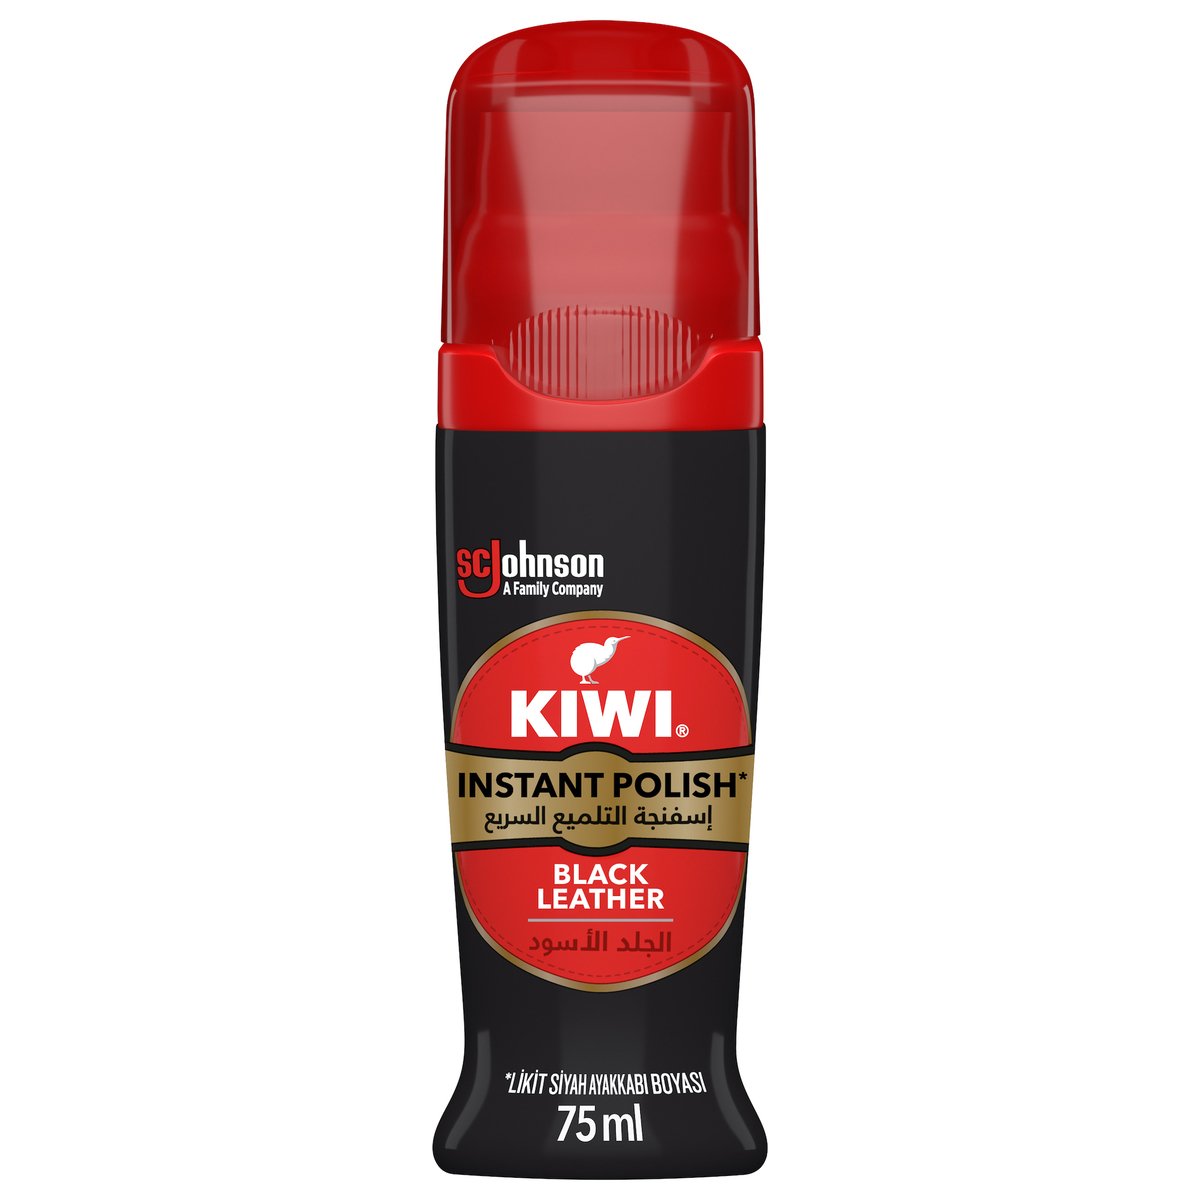 Kiwi Instant Polish Black Leather 75ml